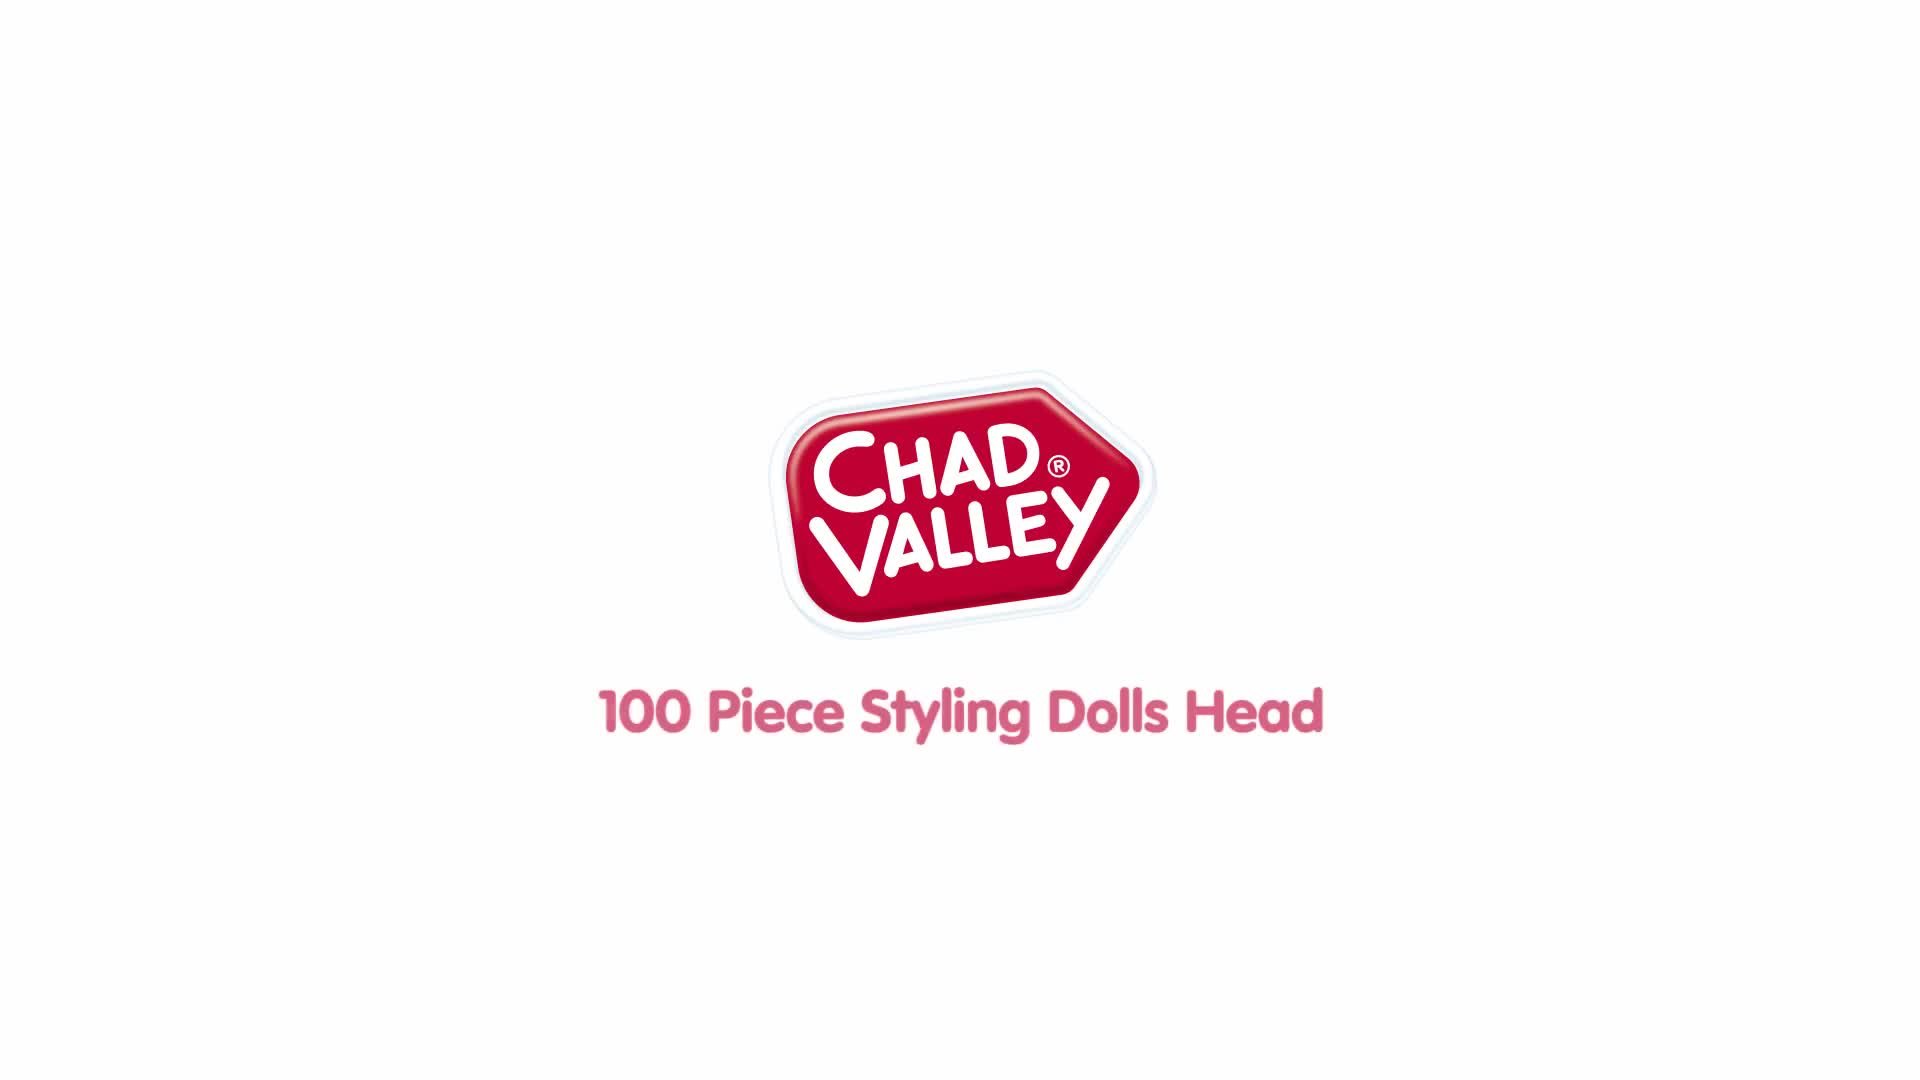 chad valley 100 piece styling dolls head